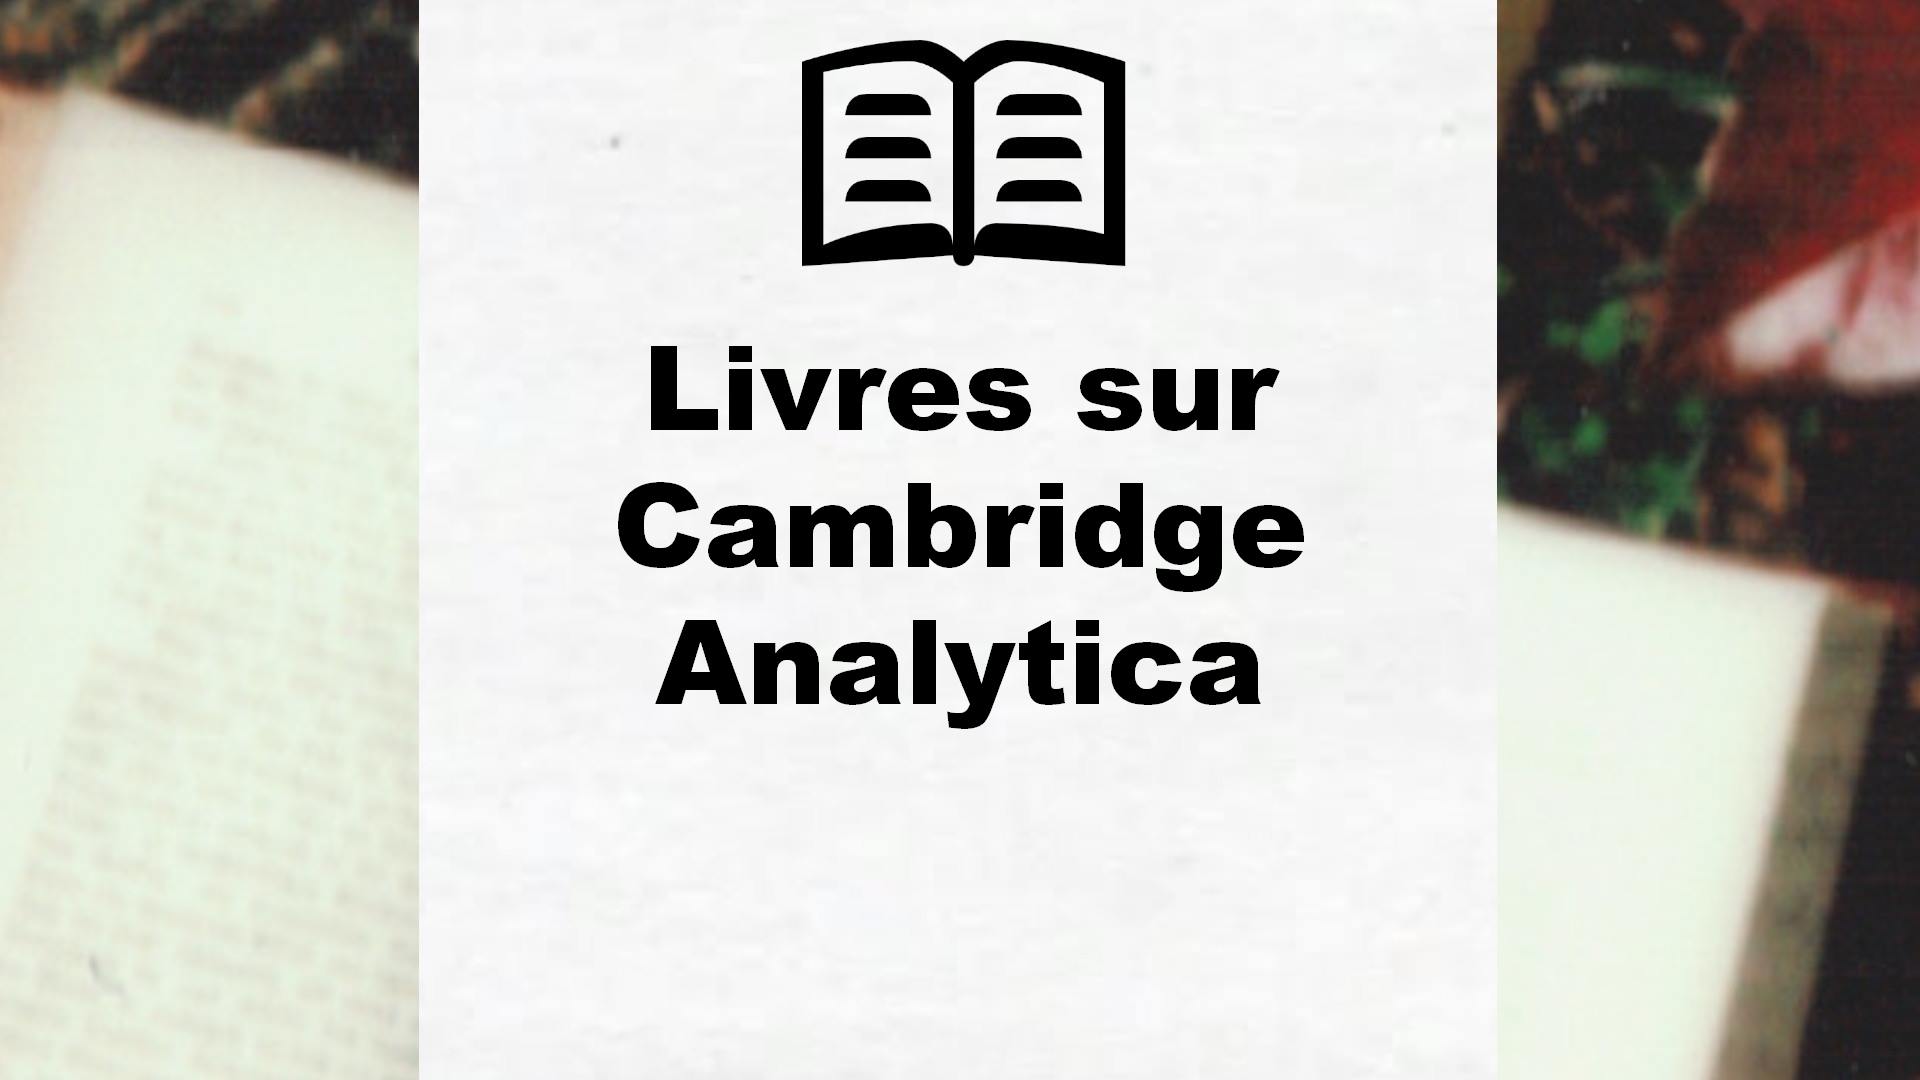 Livres sur Cambridge Analytica